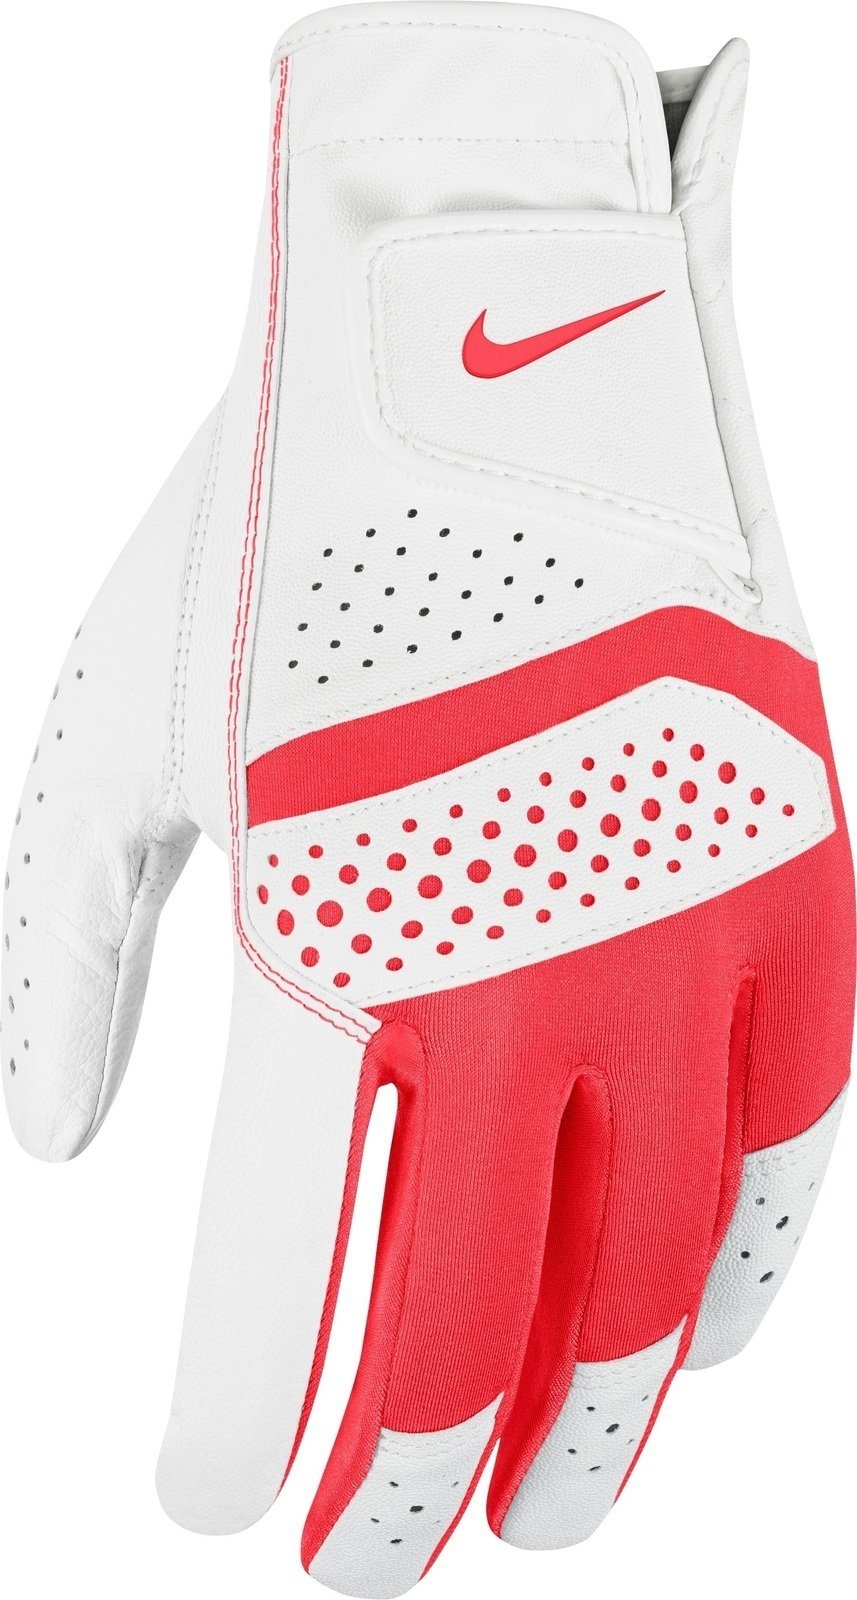 Handschuhe Nike Tech Extreme Vi Reg Lh 106 ML